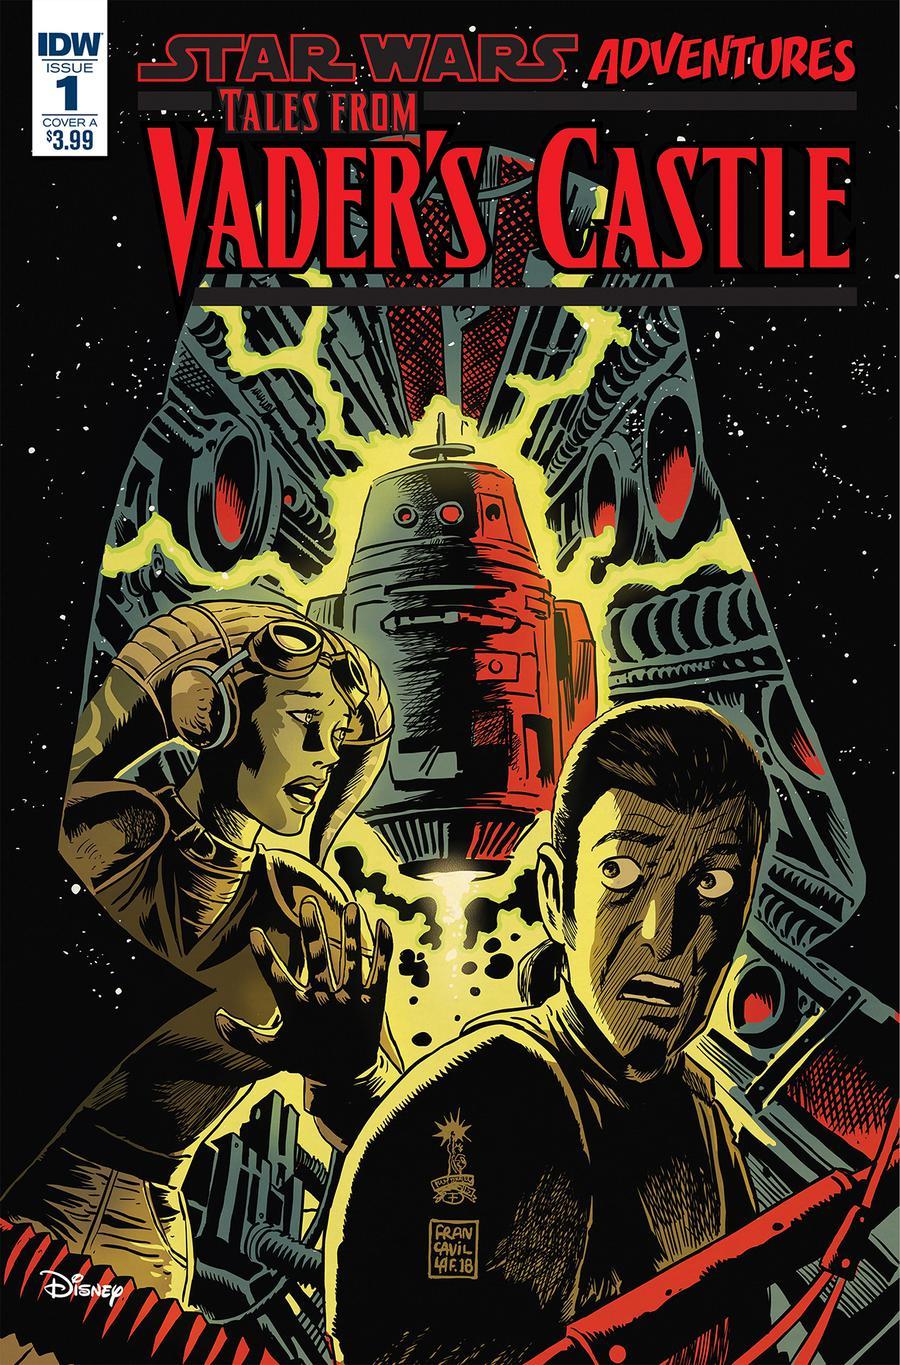 Star Wars Adventures Tales From Vaders Castle Vol. 1 #1